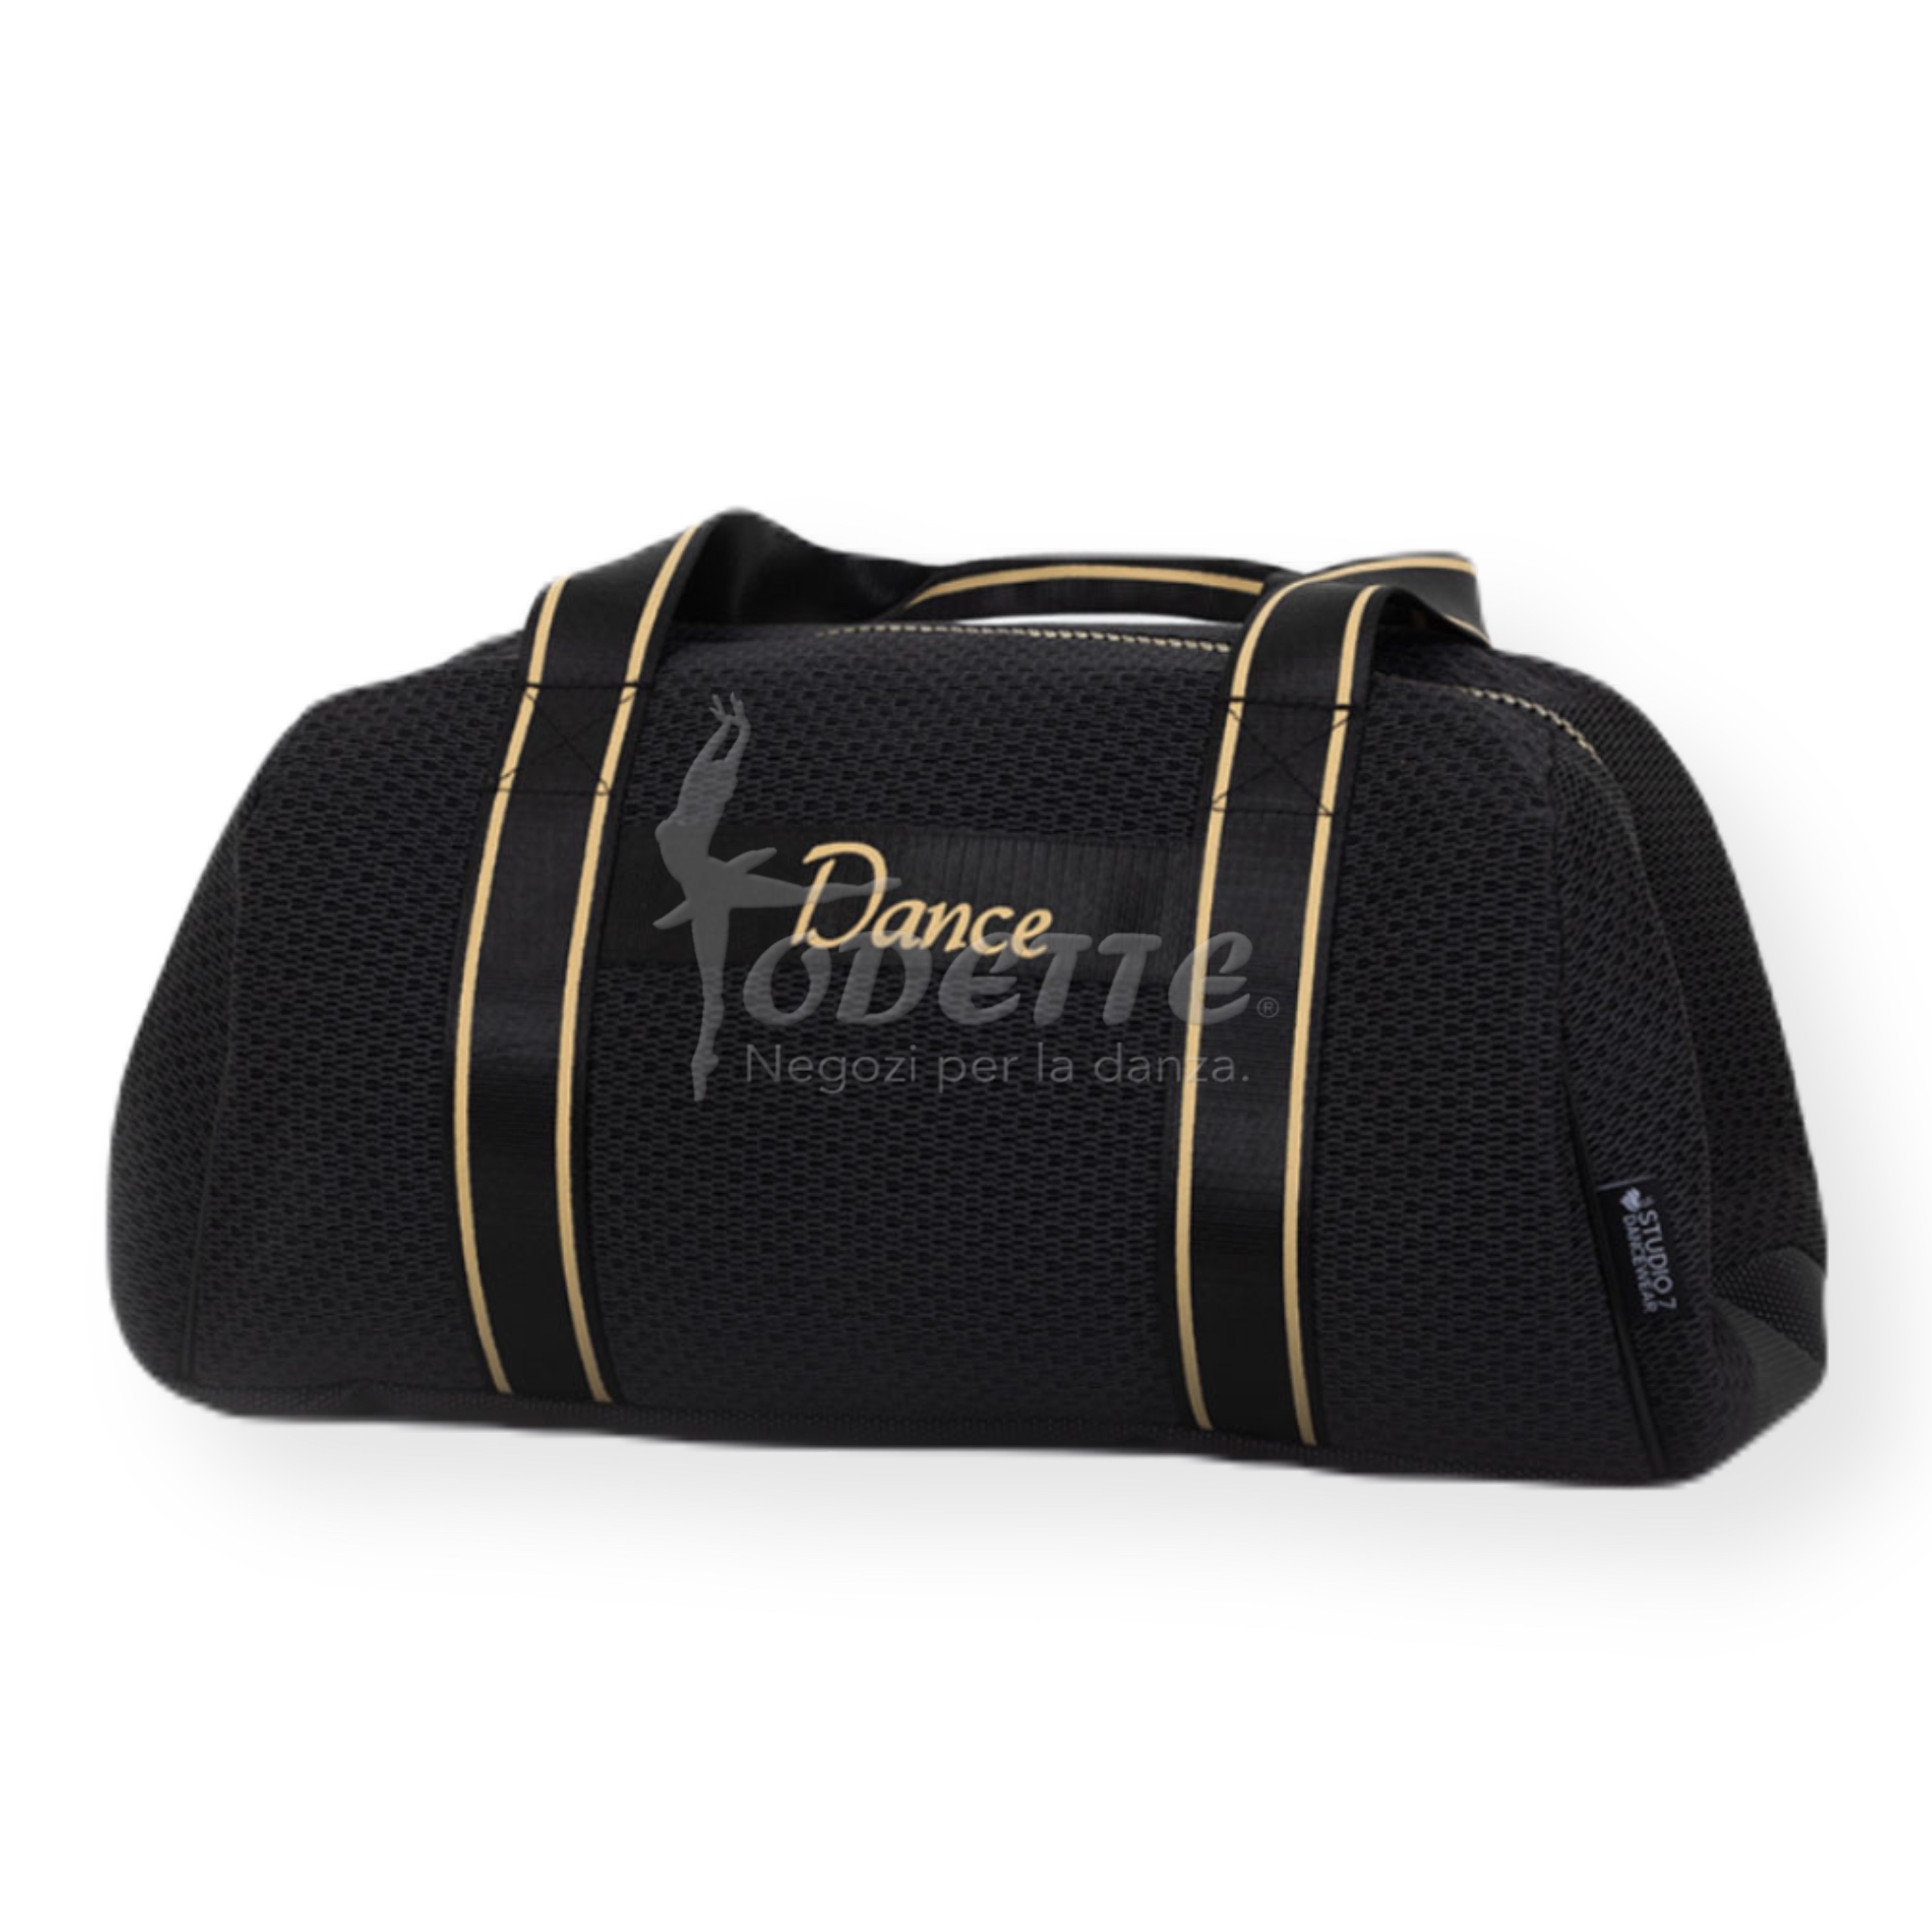 Dance large textured bag